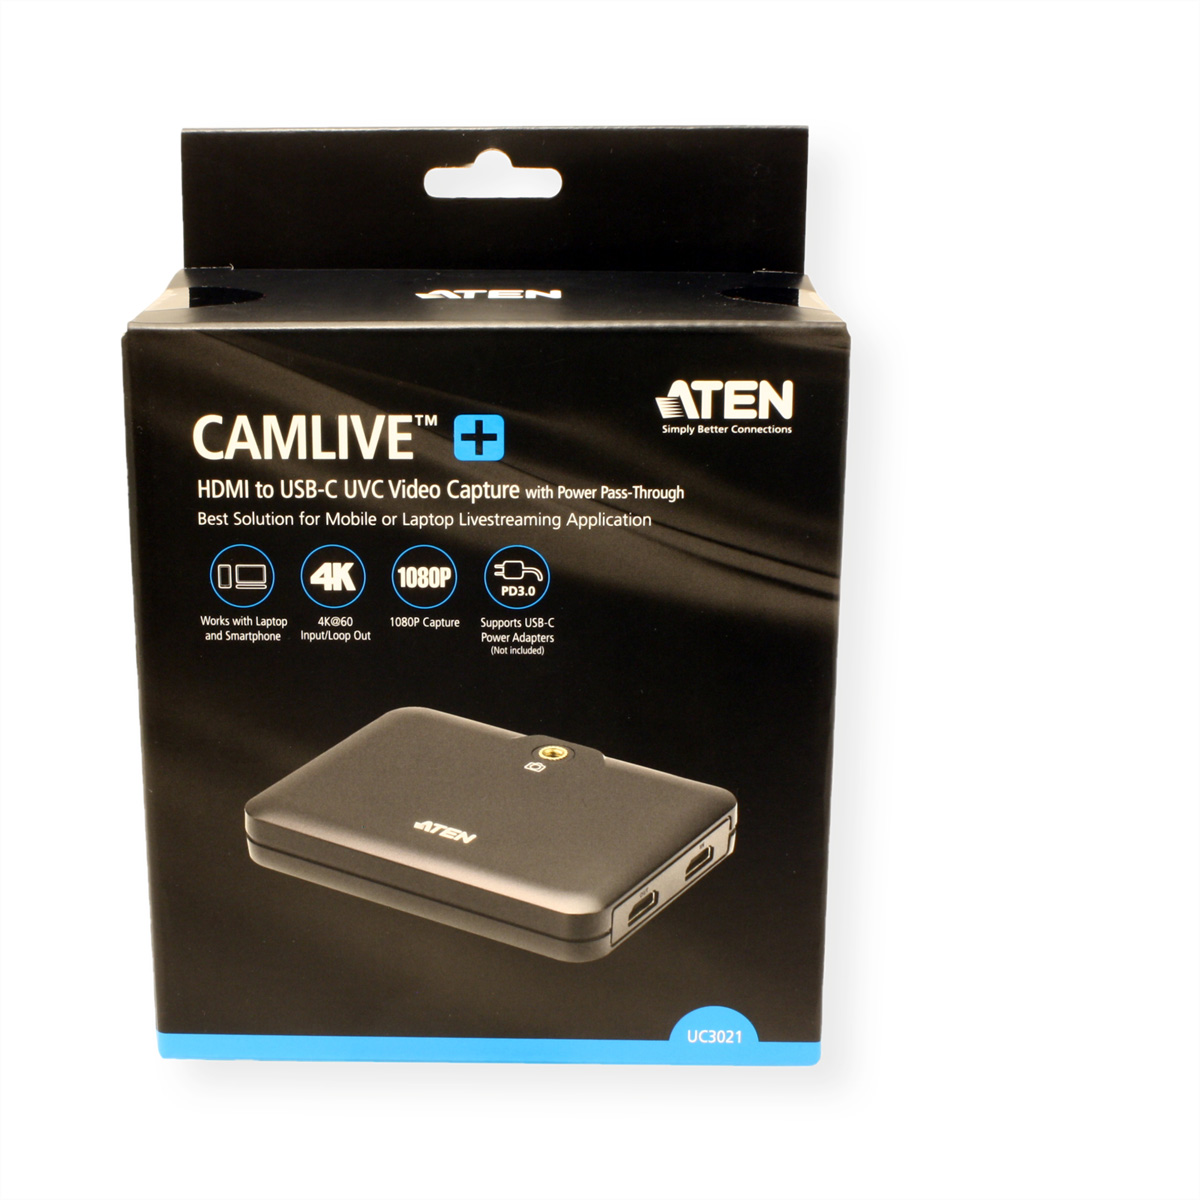 ATEN UC3021 CAMLIVE Adapter Plus USB-HDMI